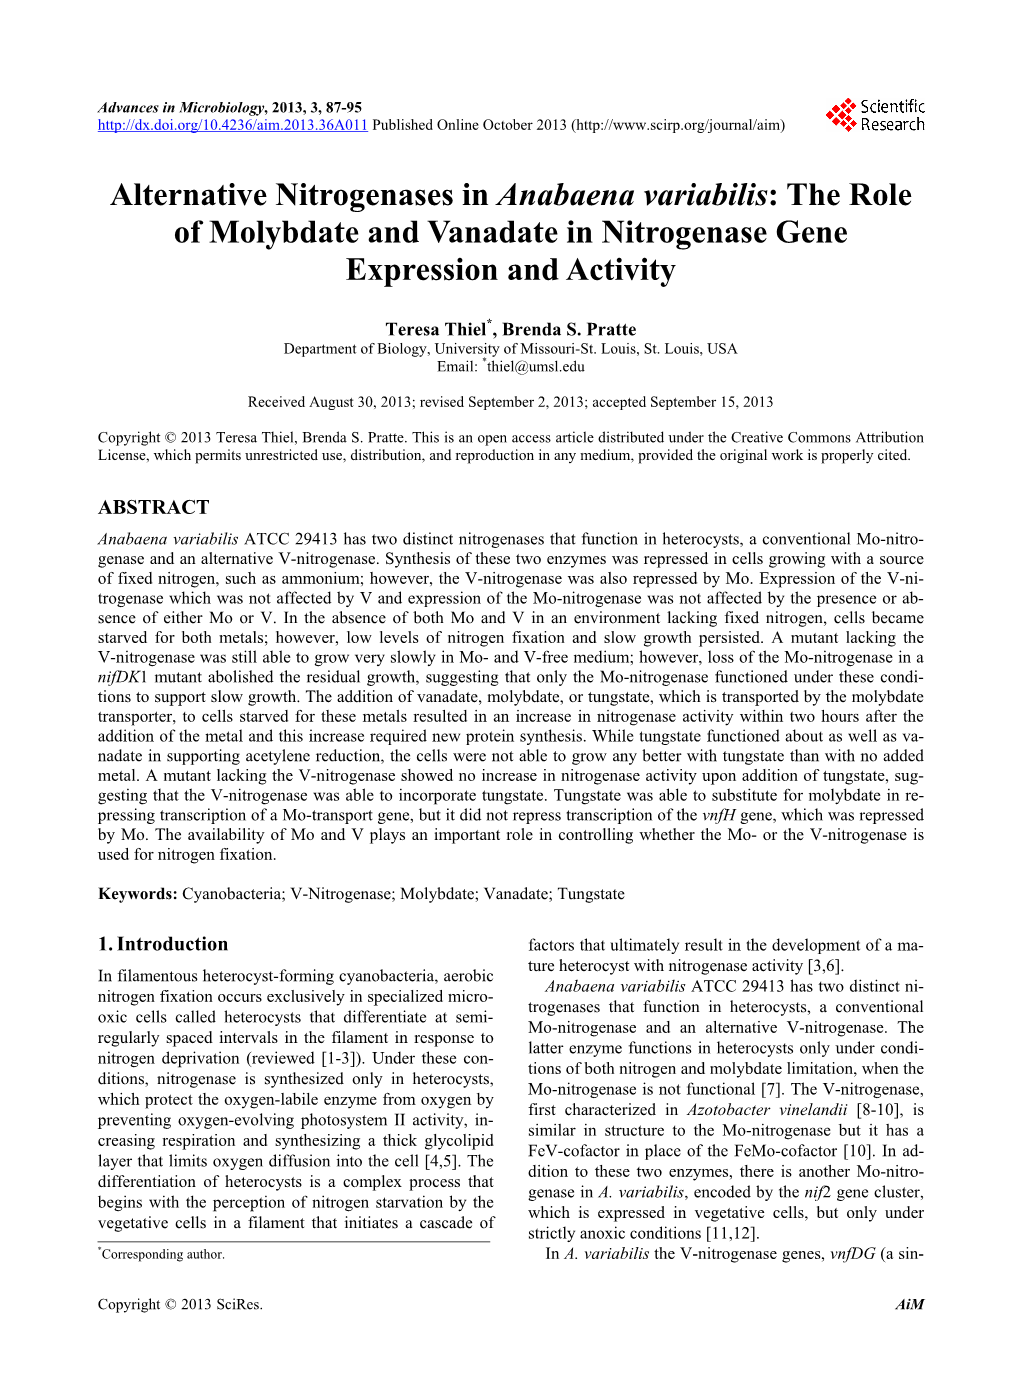 Alternative Nitrogenases in Anabaena Variabilis: the Role of Molybdate and Vanadate in Nitrogenase Gene Expression and Activity